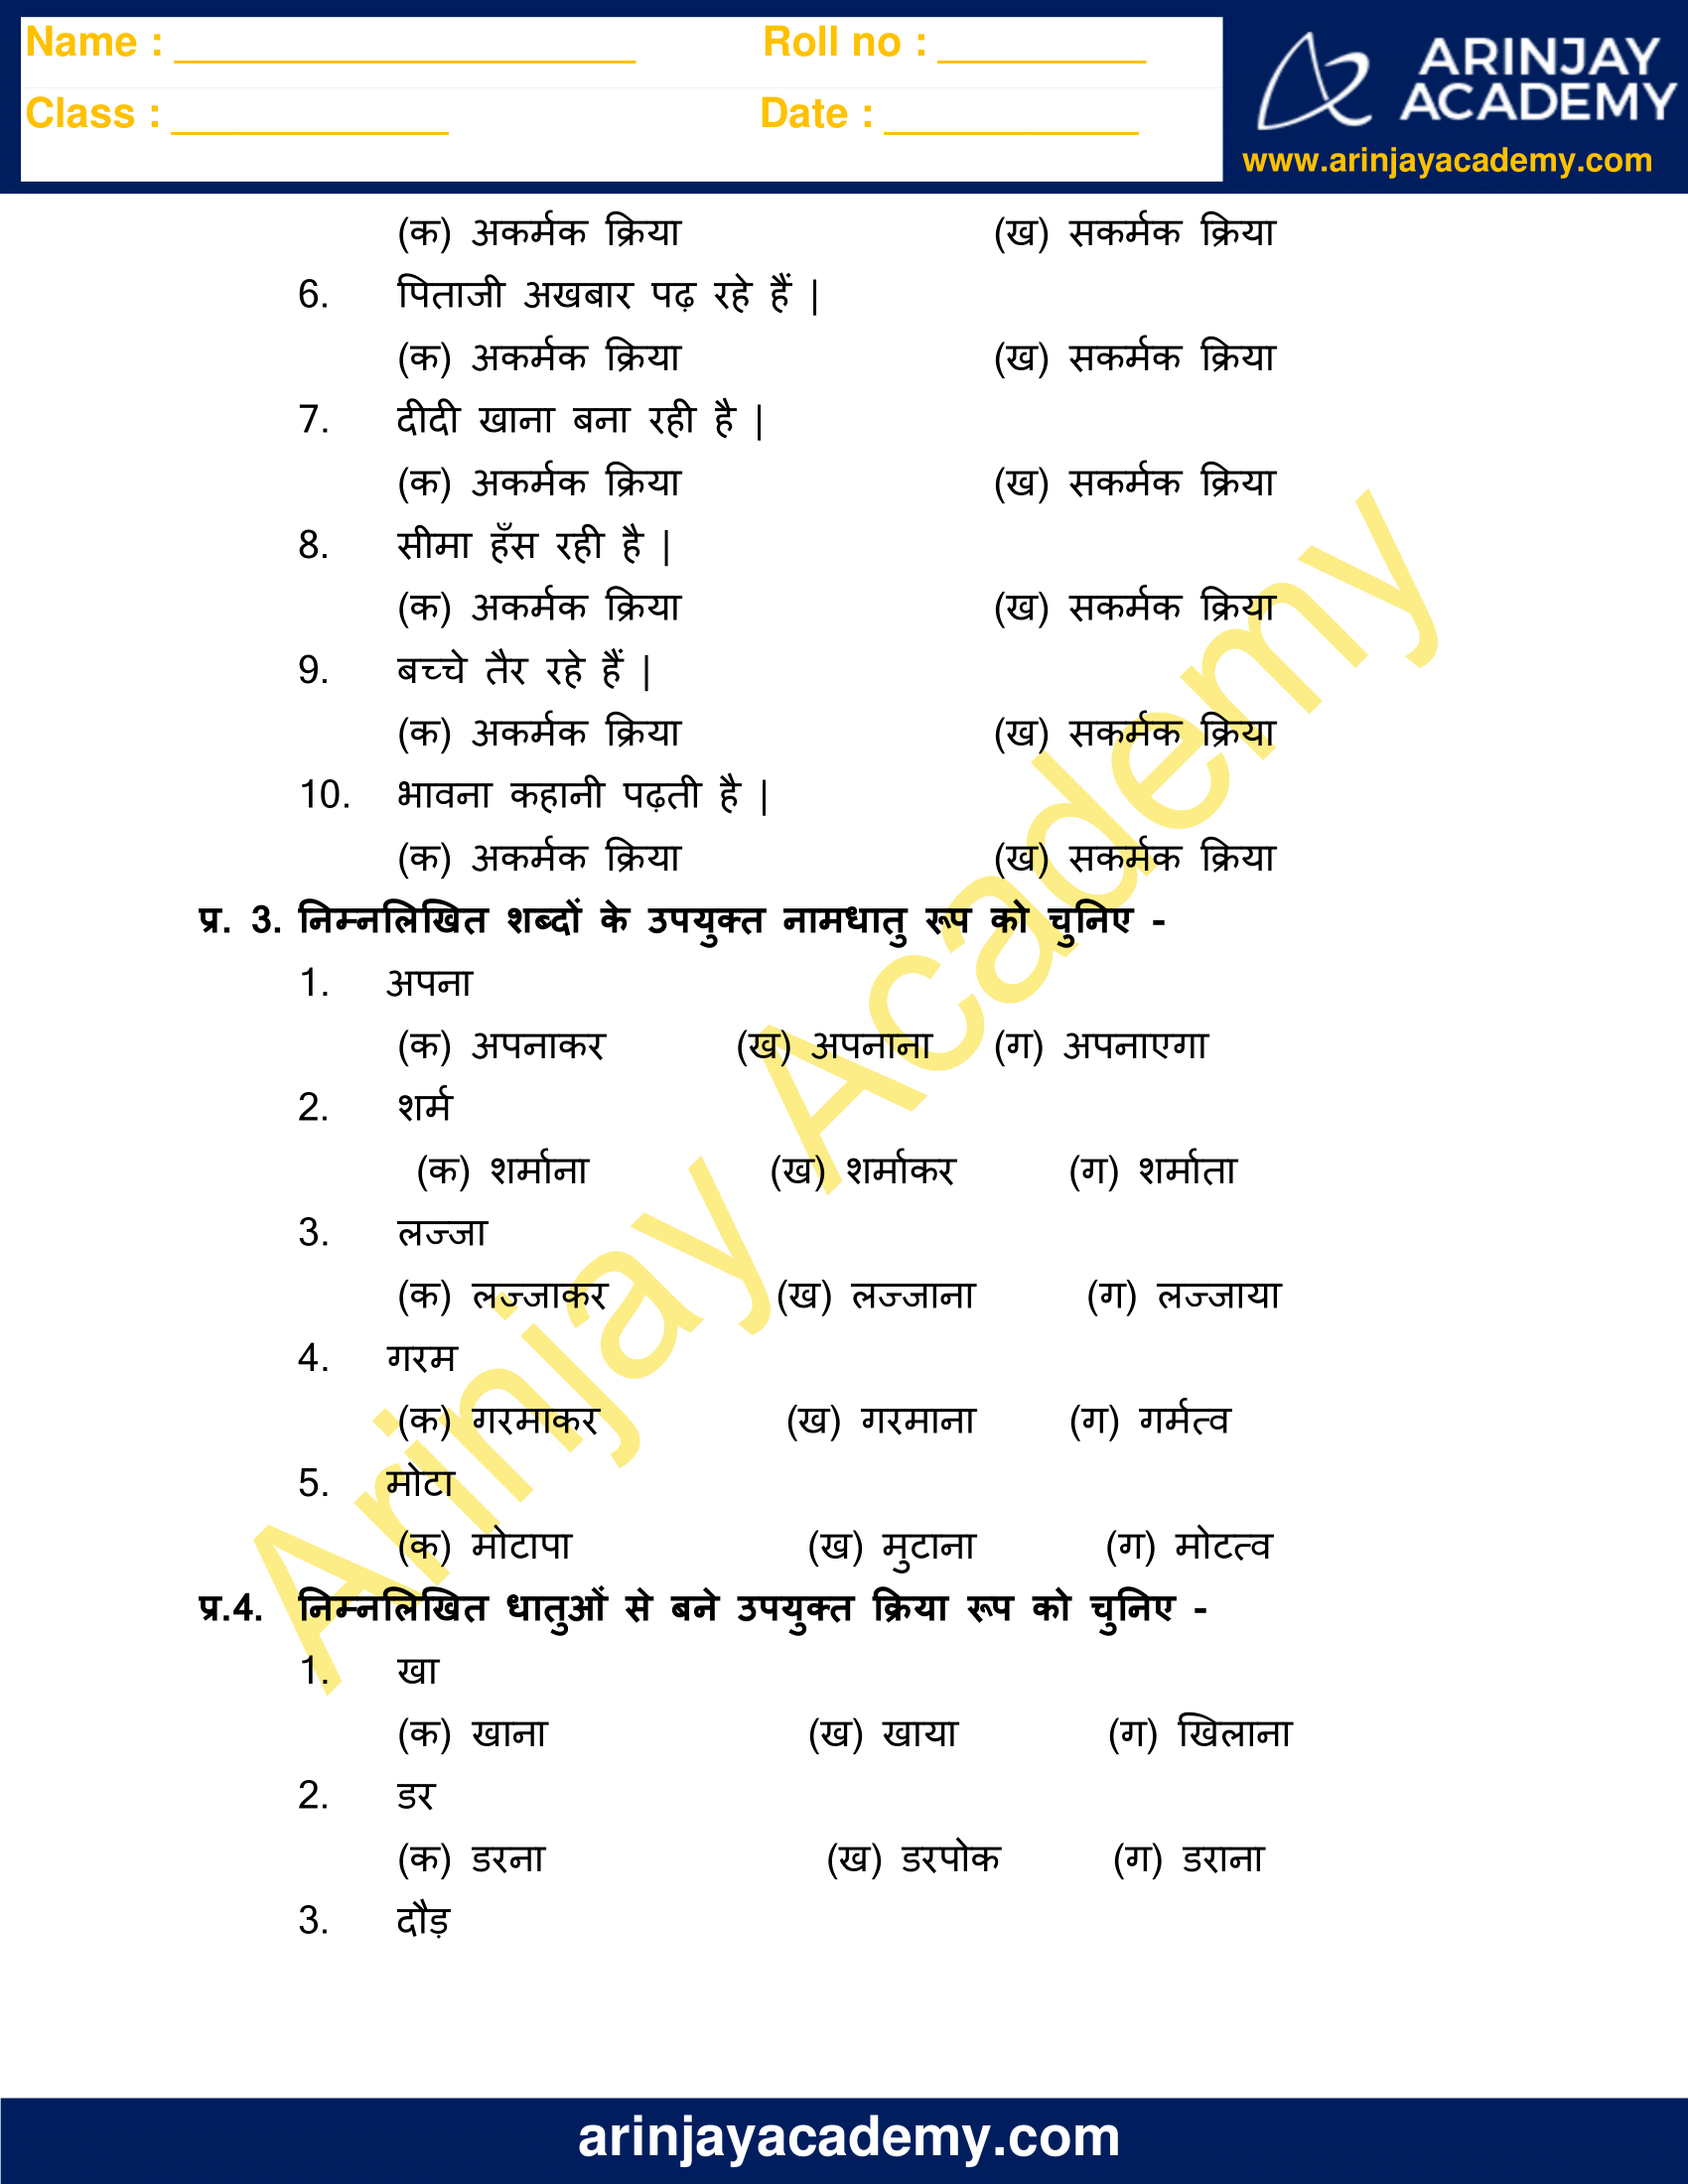 kriya worksheet for class 6 free and printable arinjay